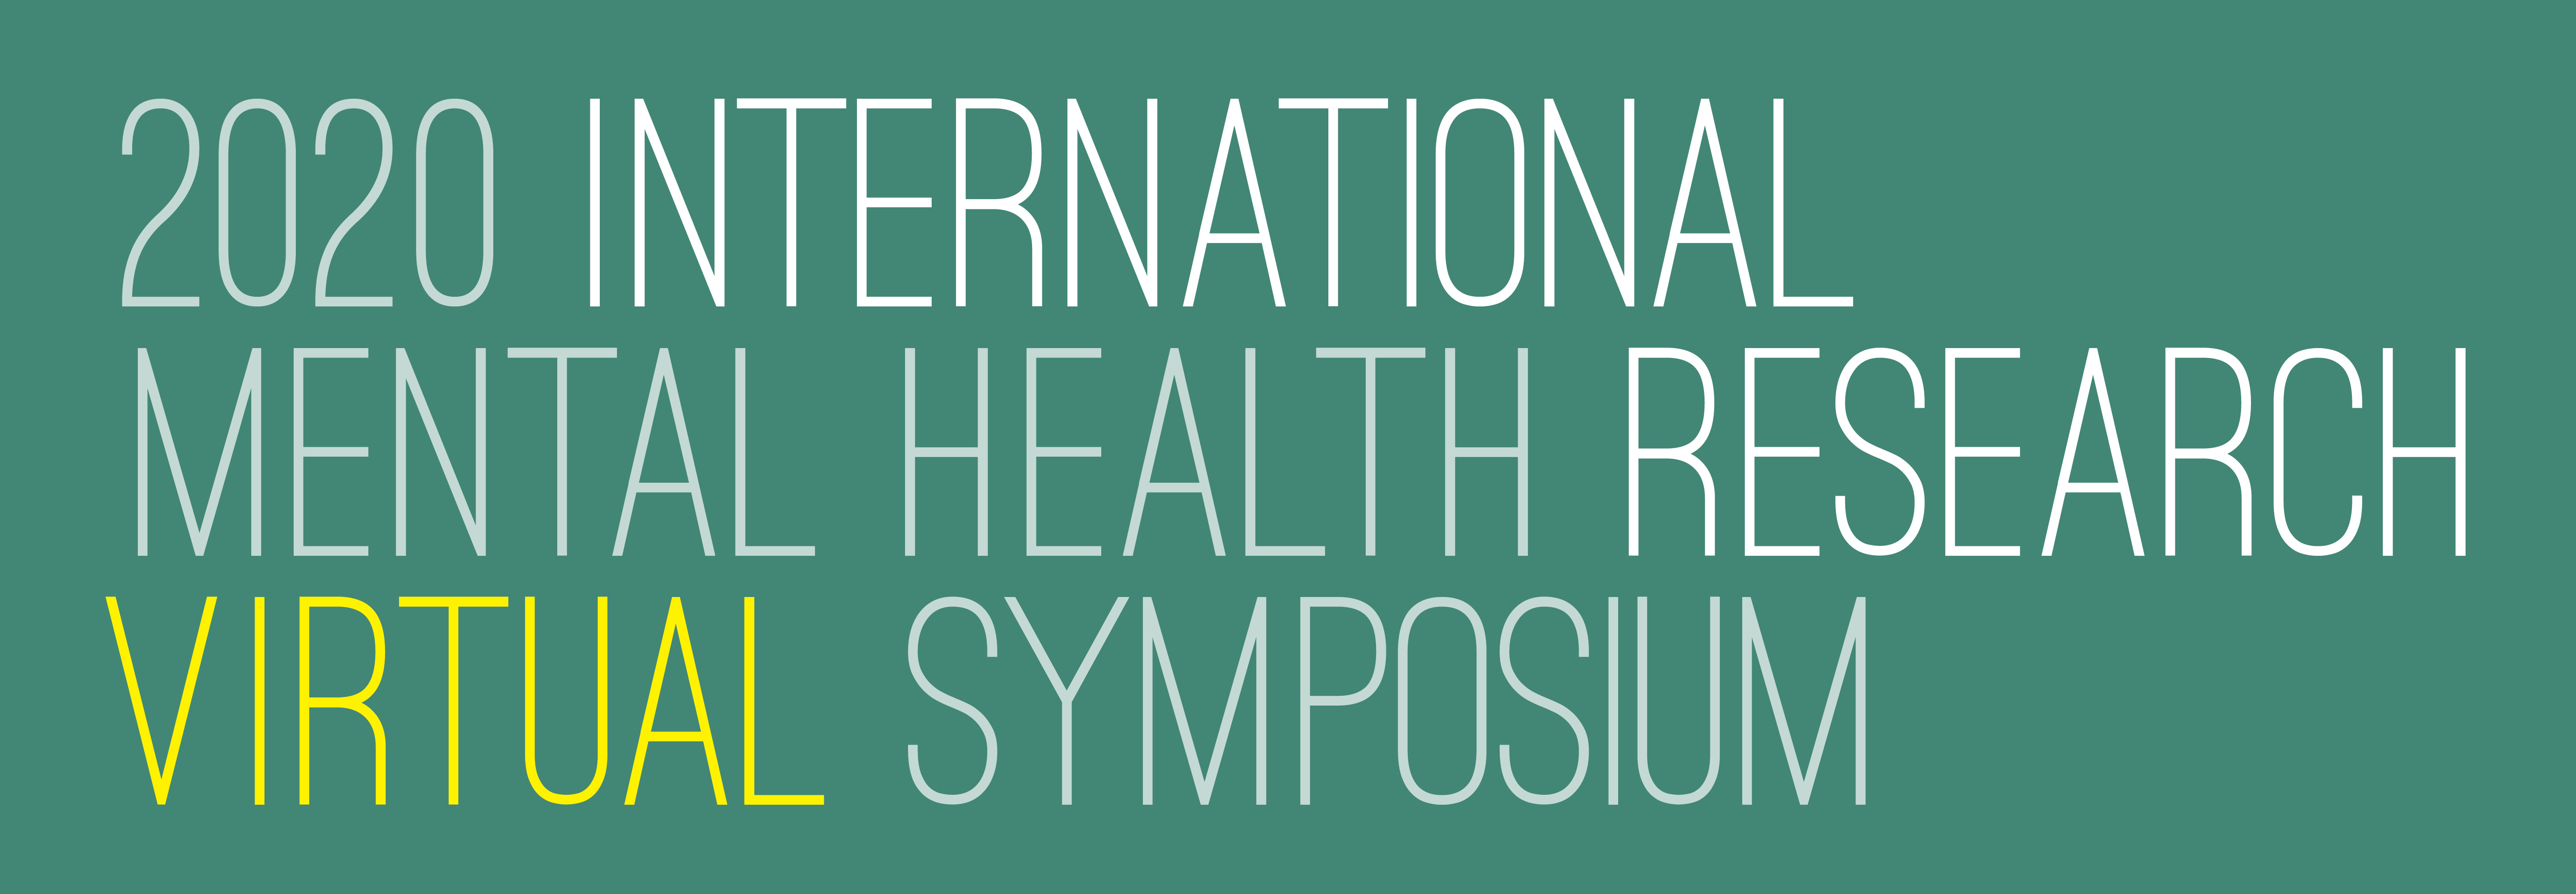 2020 International Mental Health Research Symposium
